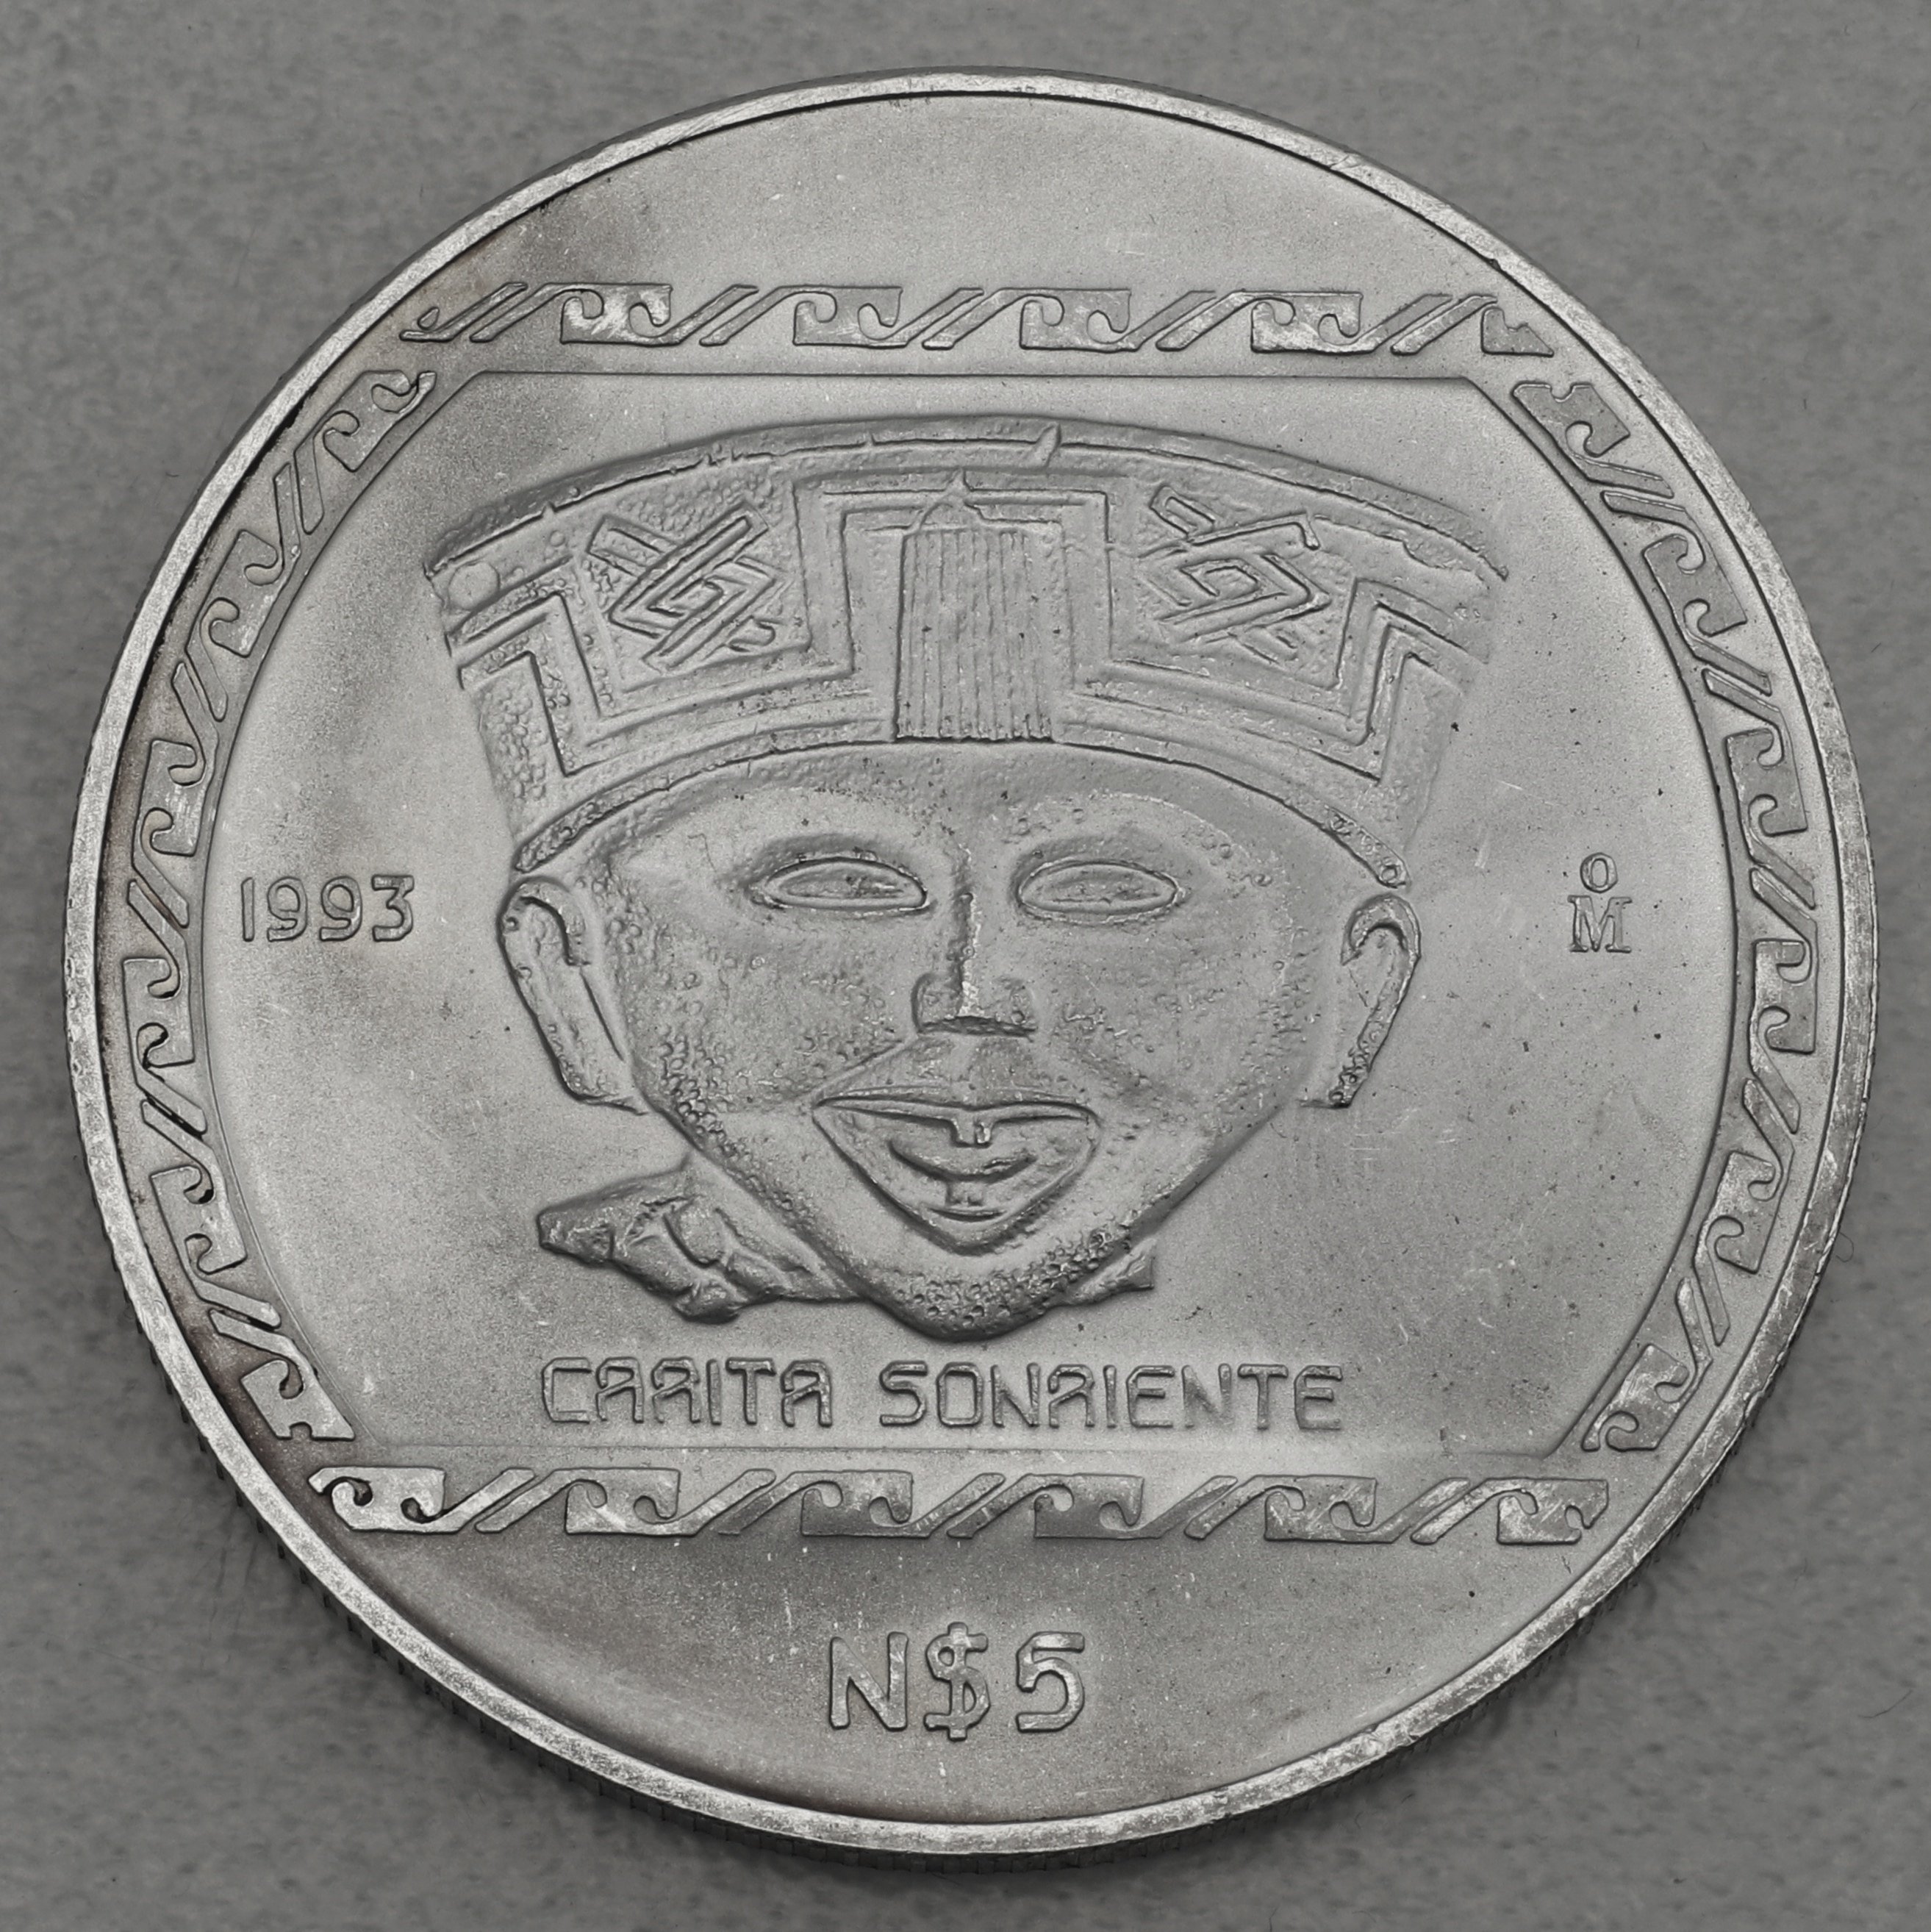 Silbermünze 1oz Carita Sonriente 1993 Präkolumbische Kulturen ? Veracruz (Mexiko)